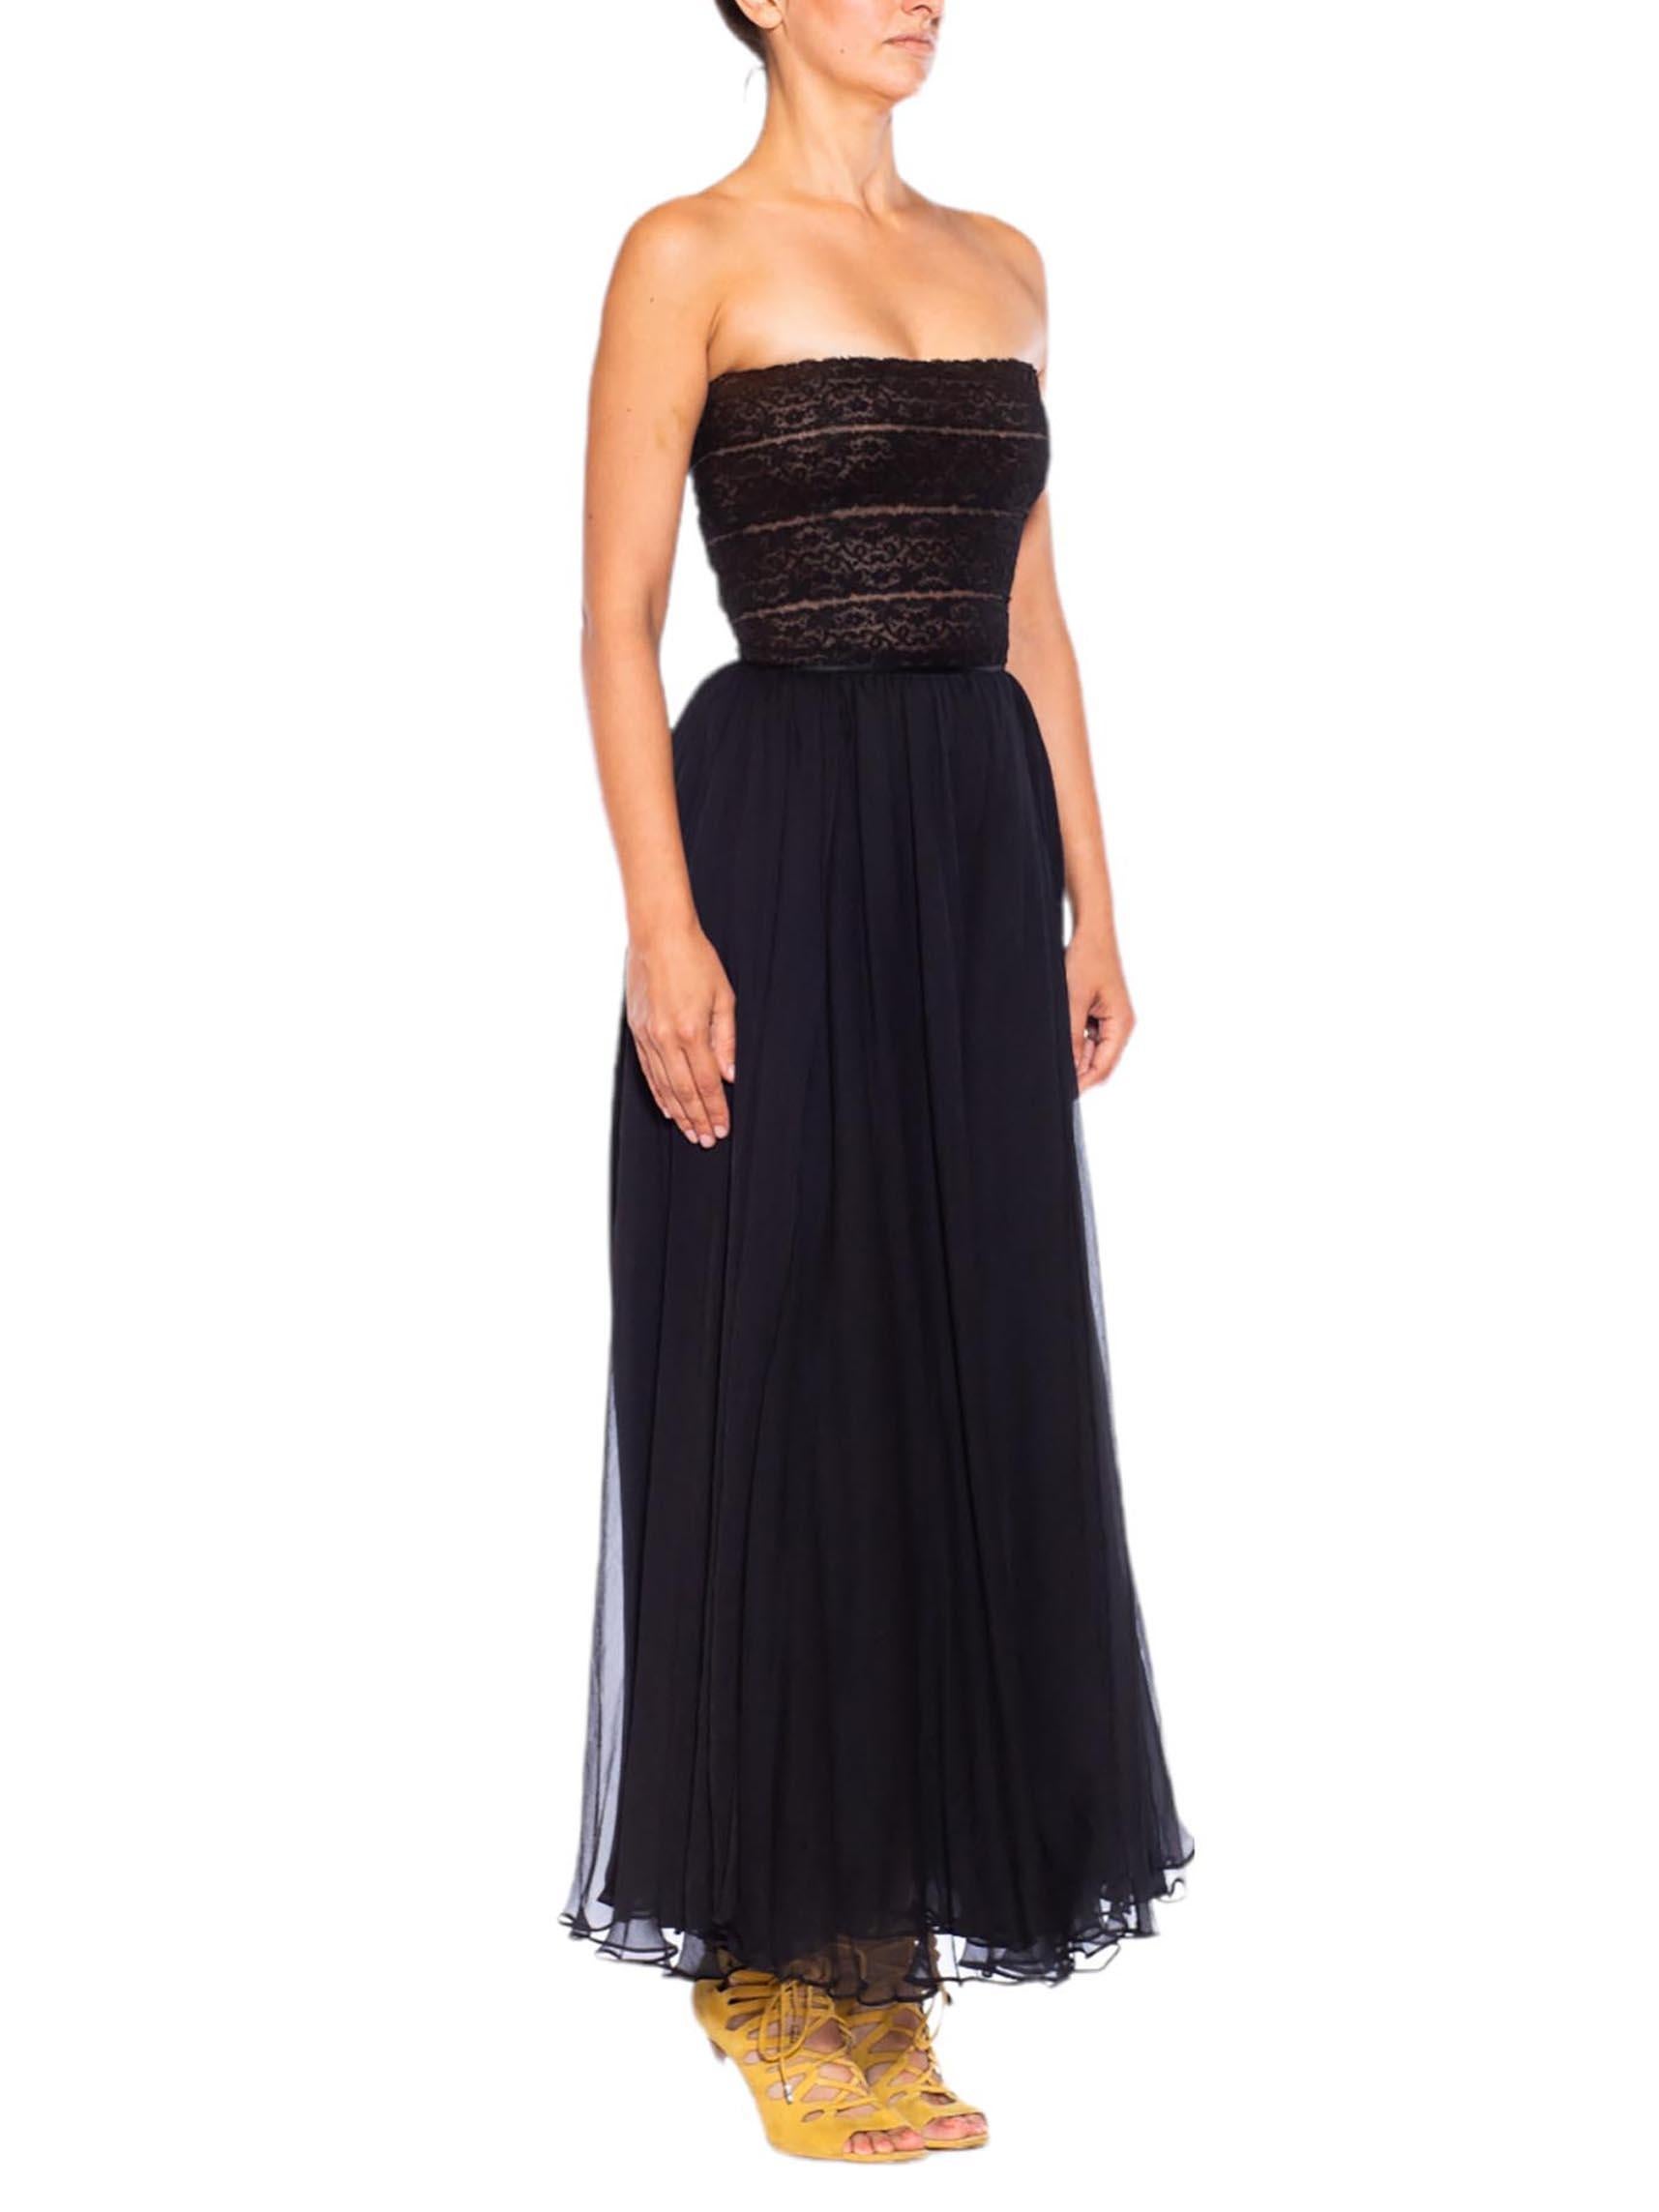 1980S OSCAR DE LA RENTA Black Silk Chiffon & Lace Strapless Gown XS For Sale 5